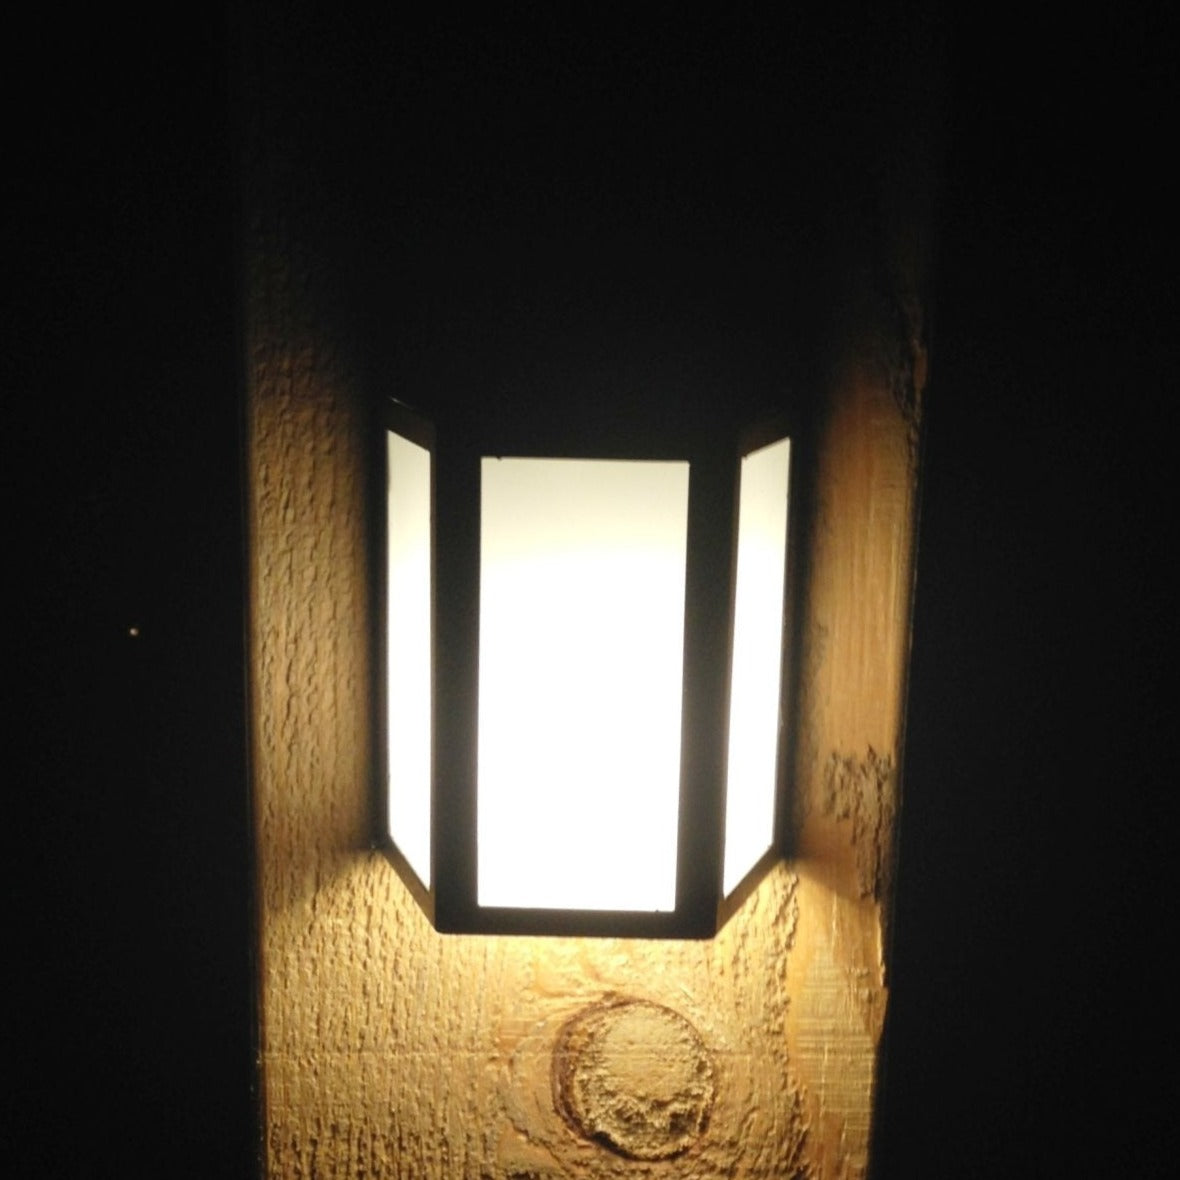 Hex LED Deck Light - DL308SQ - Silhouette Lights